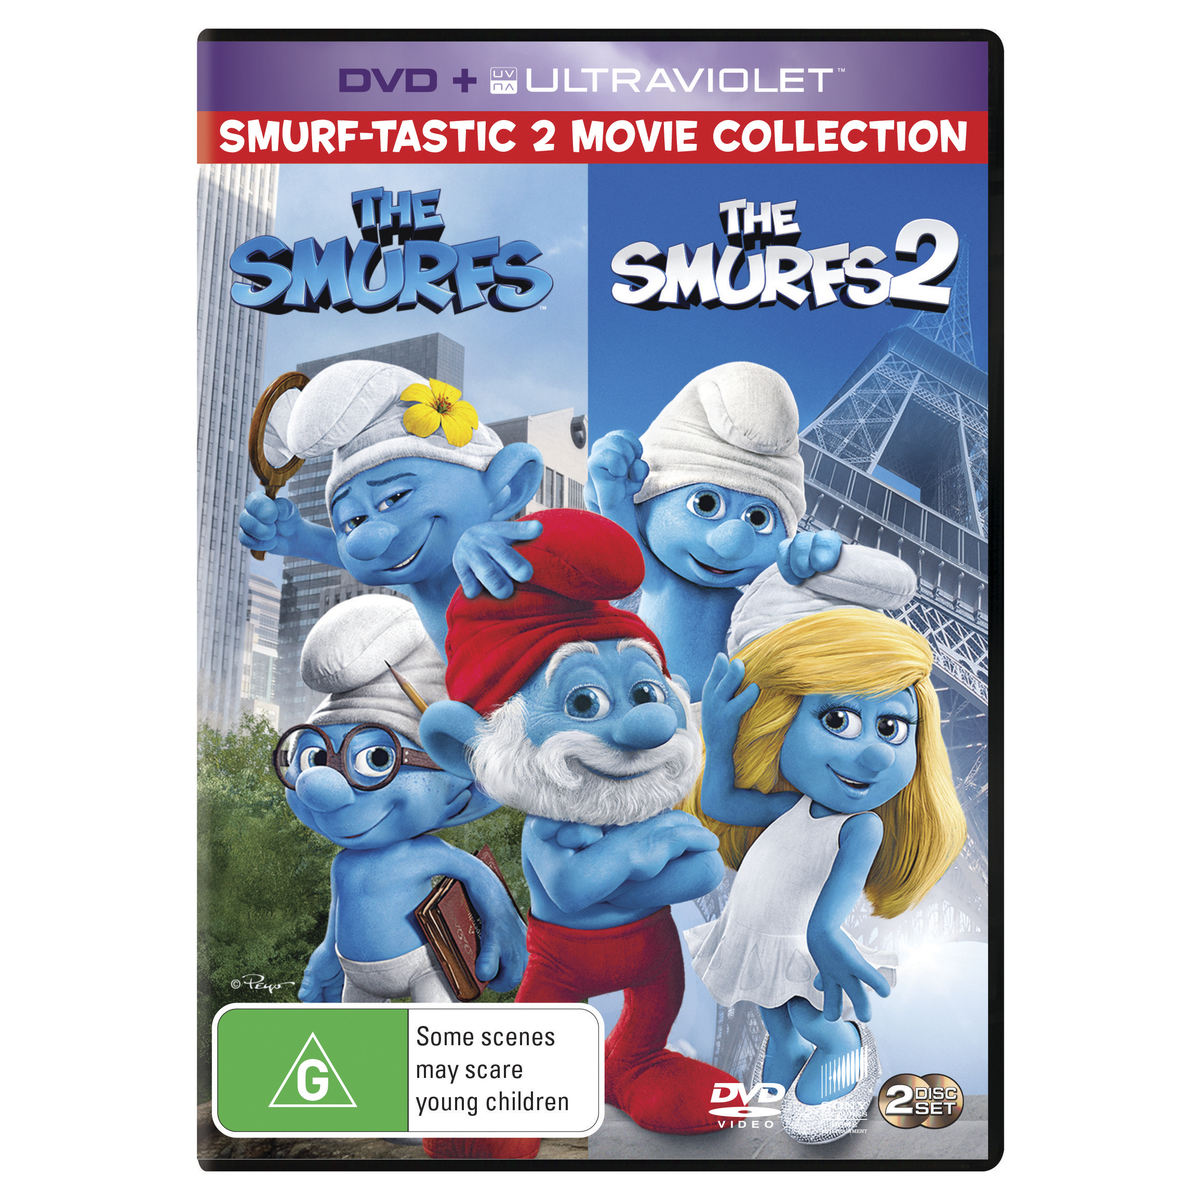 Smurf-Tastic Movie Collection - DVD